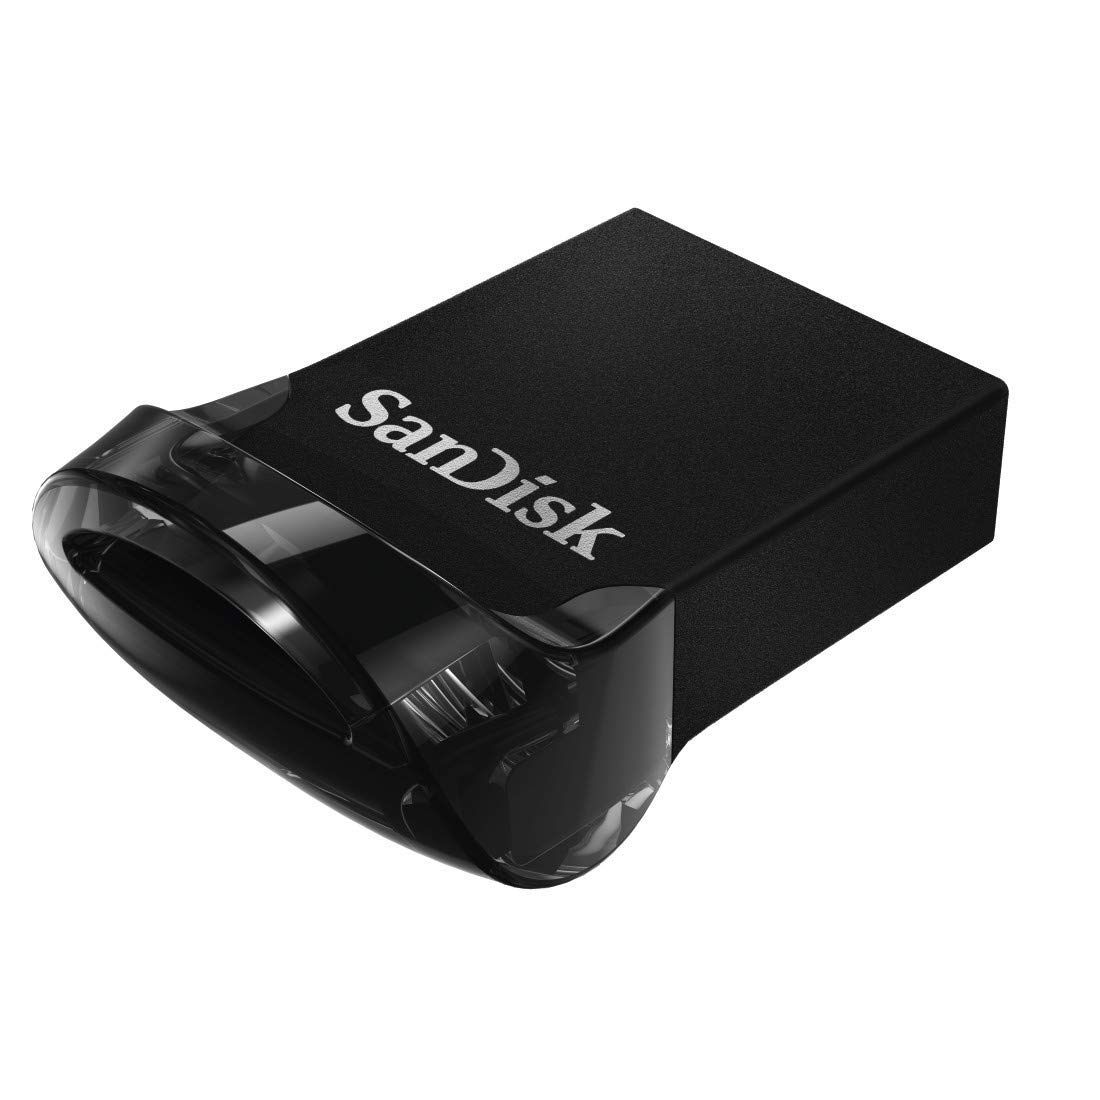 USB 3.1 SanDisk Ultra Fit de 128 GB solo 17,9€